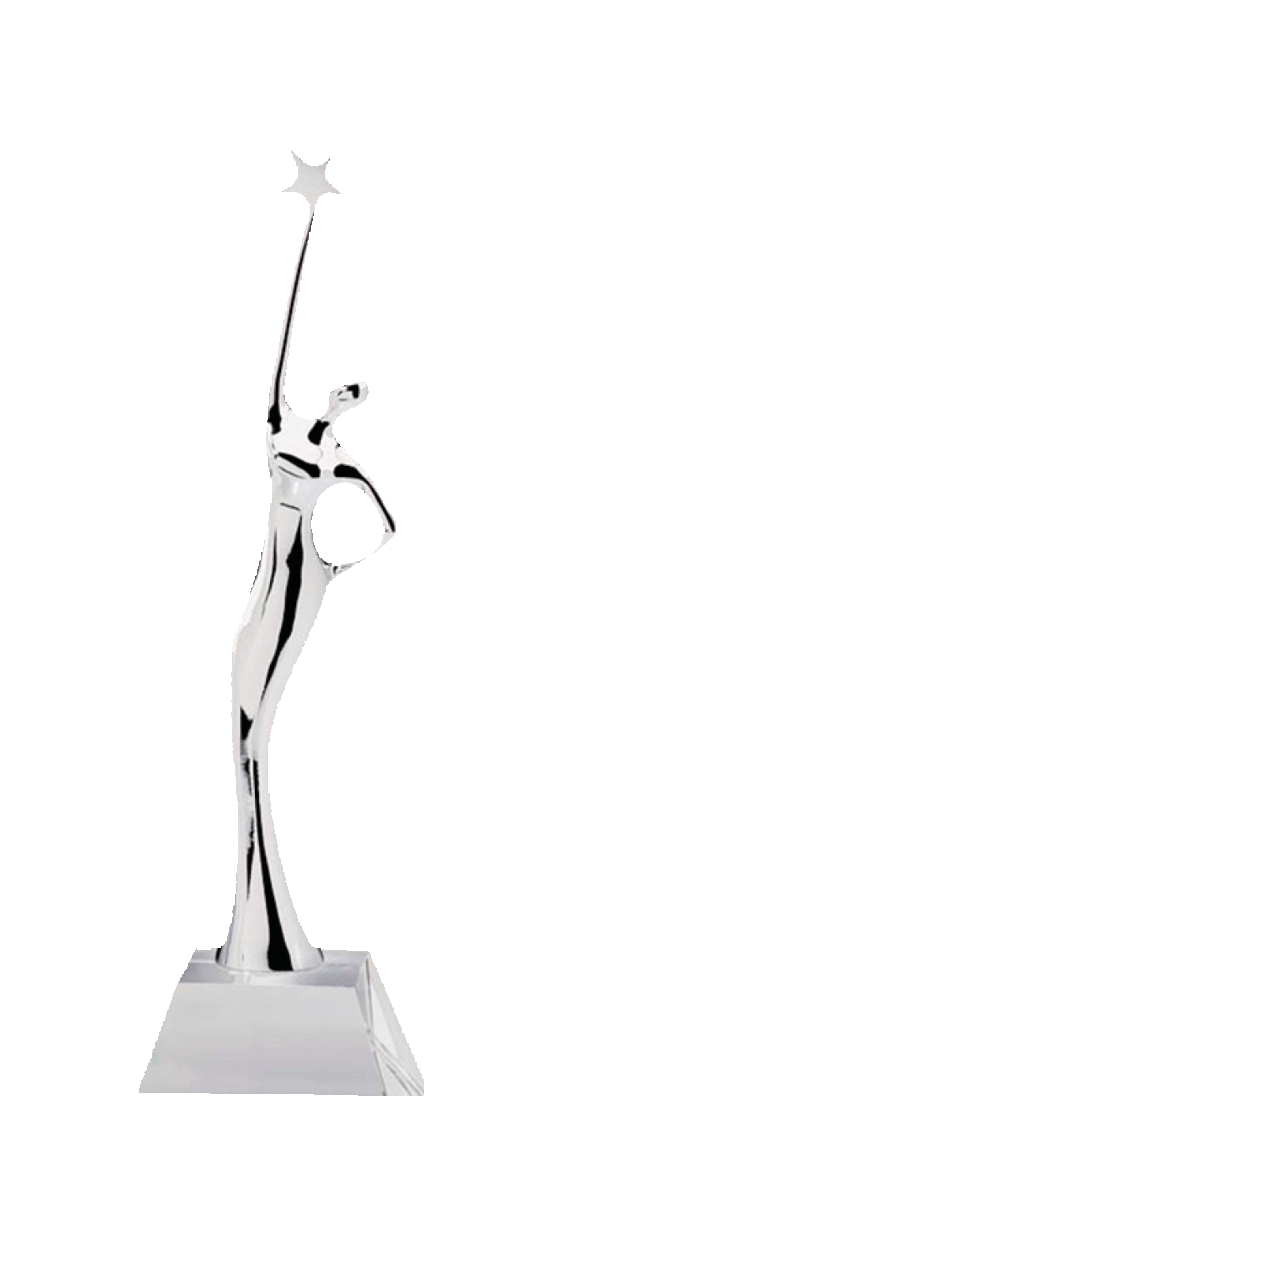 Mejor video online de Latinoamérica. Reeds Awards 2020